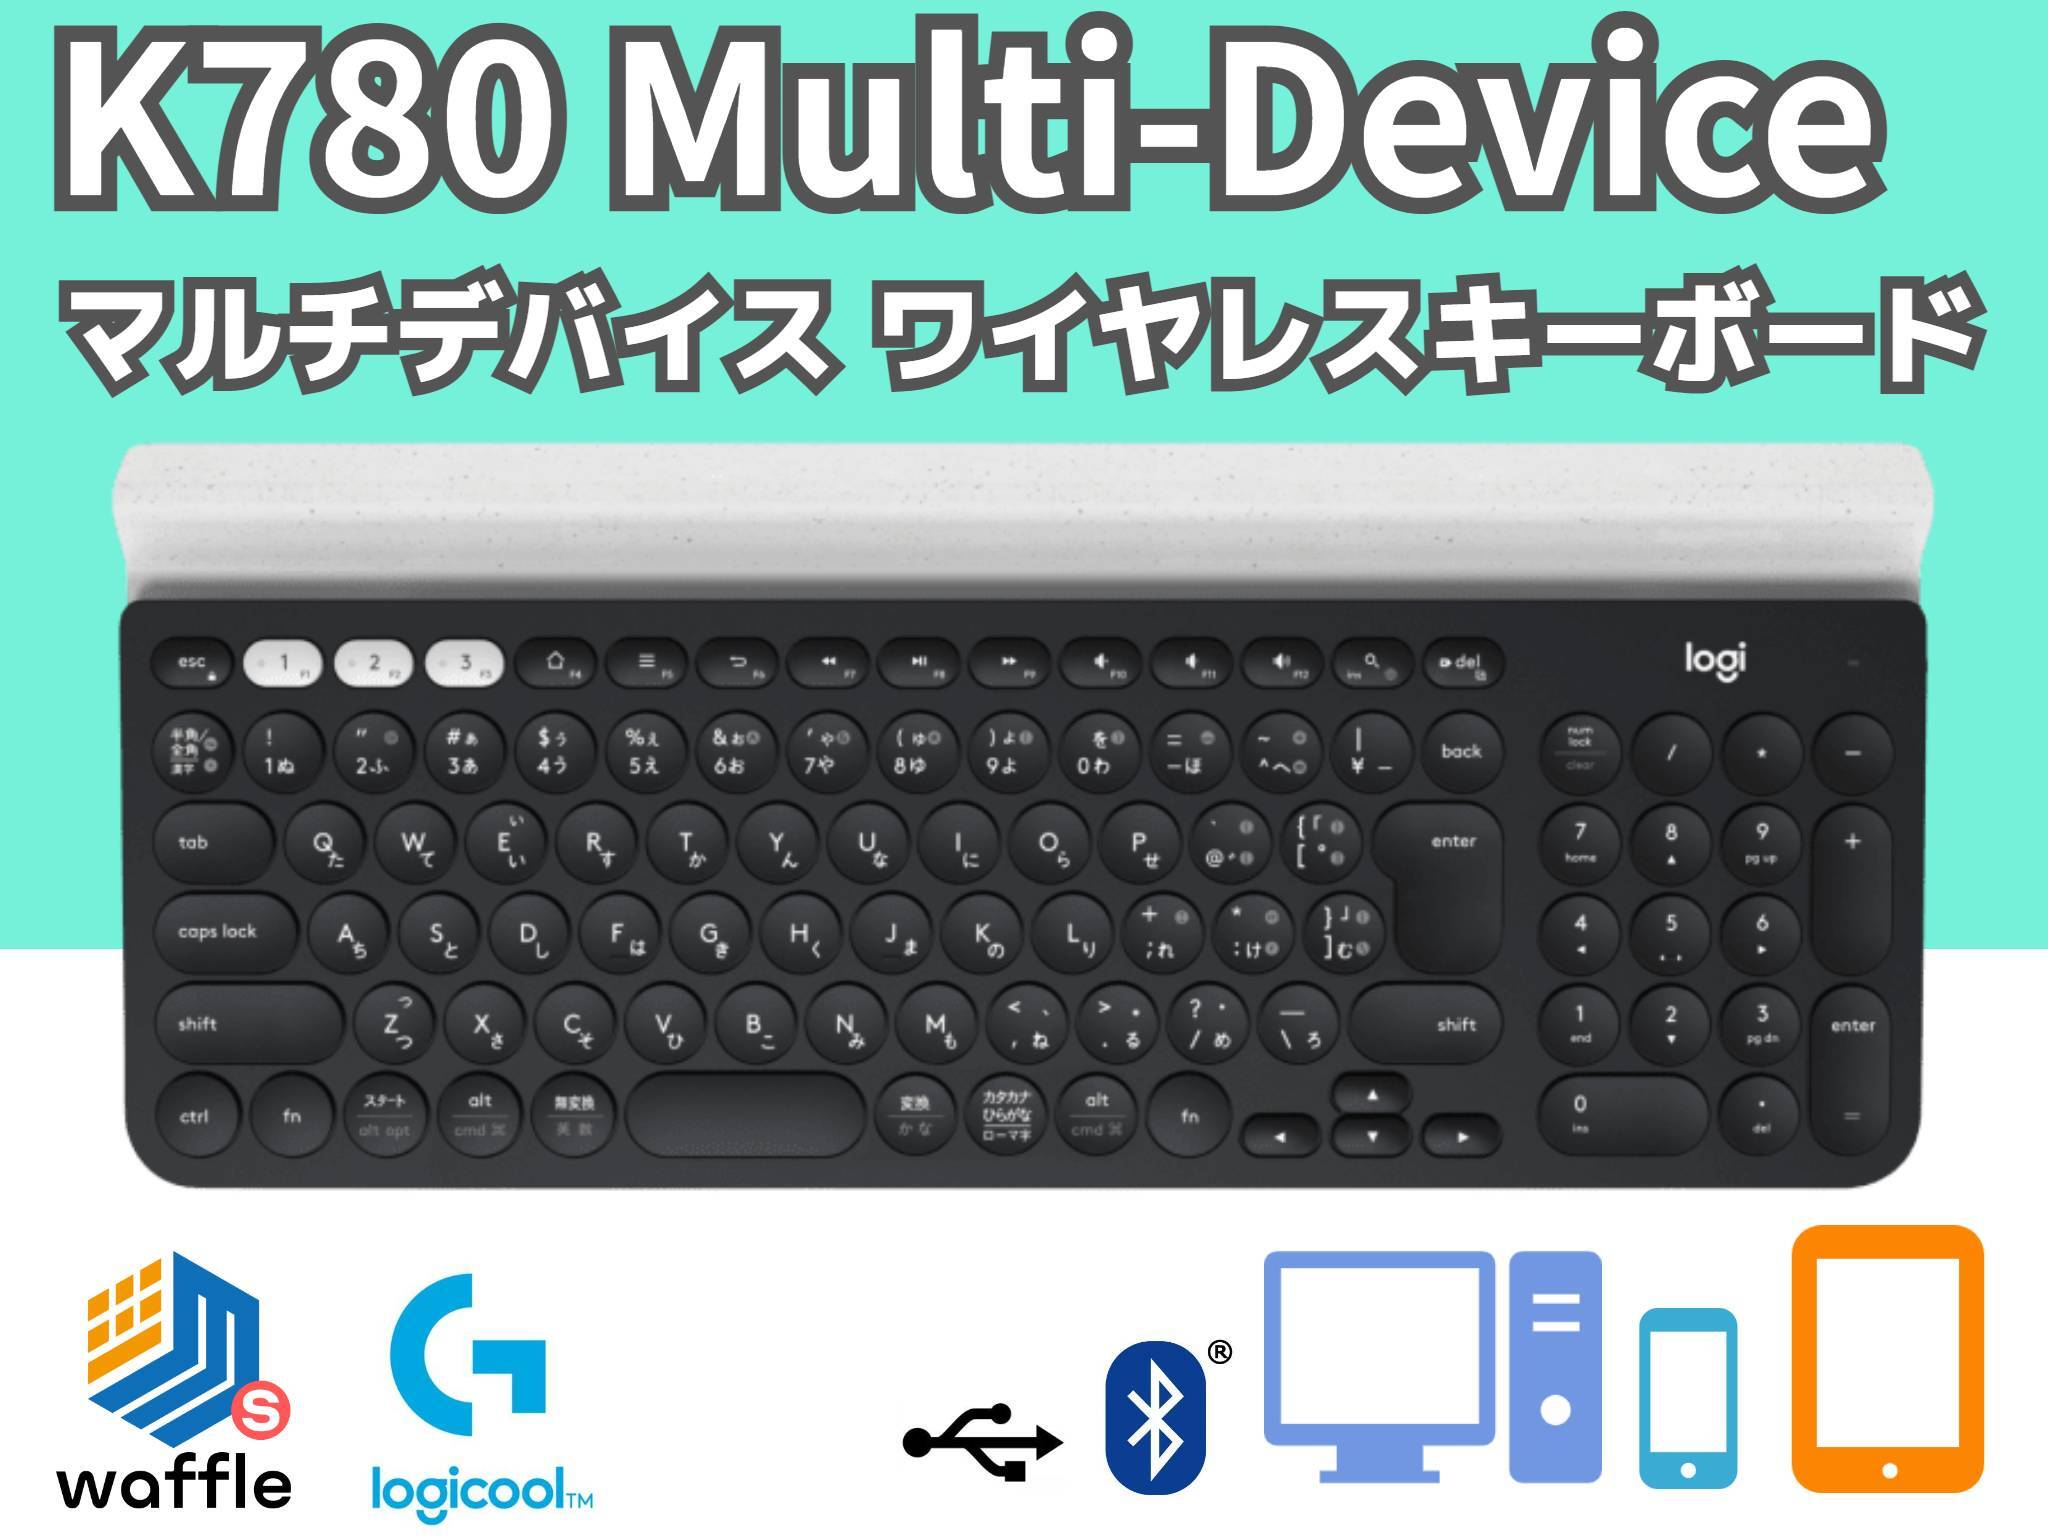 logicool K780 Multi-Device マルチデバイス ワイヤレスキーボード